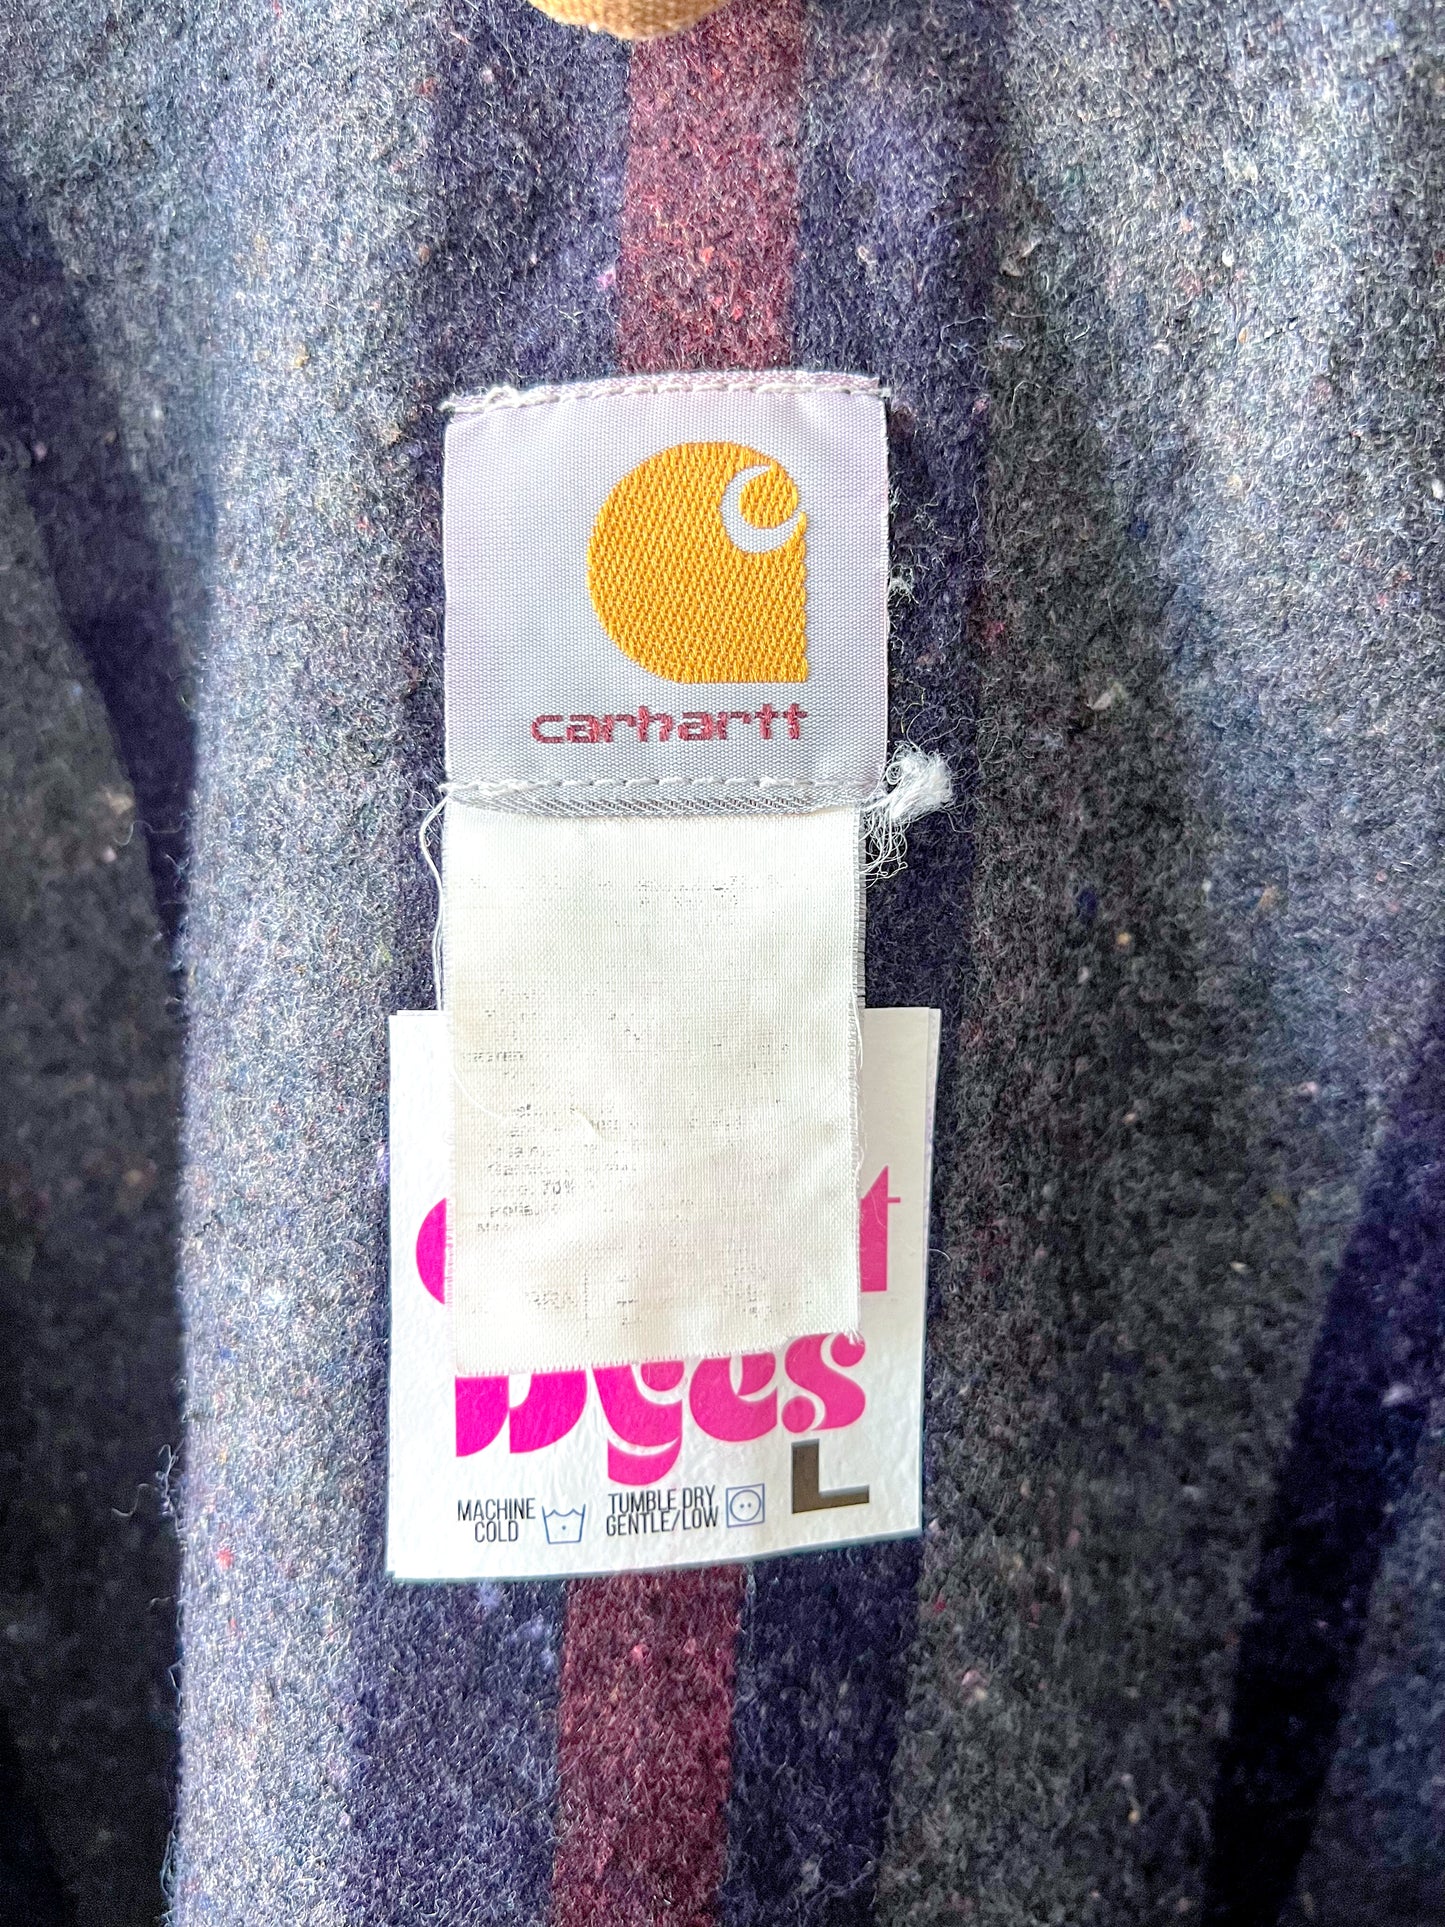 FLORIDA - Vintage 90s Carhartt Acid Washed Blanket Lined Chore Coat - Tan, Beige - Unisex Large